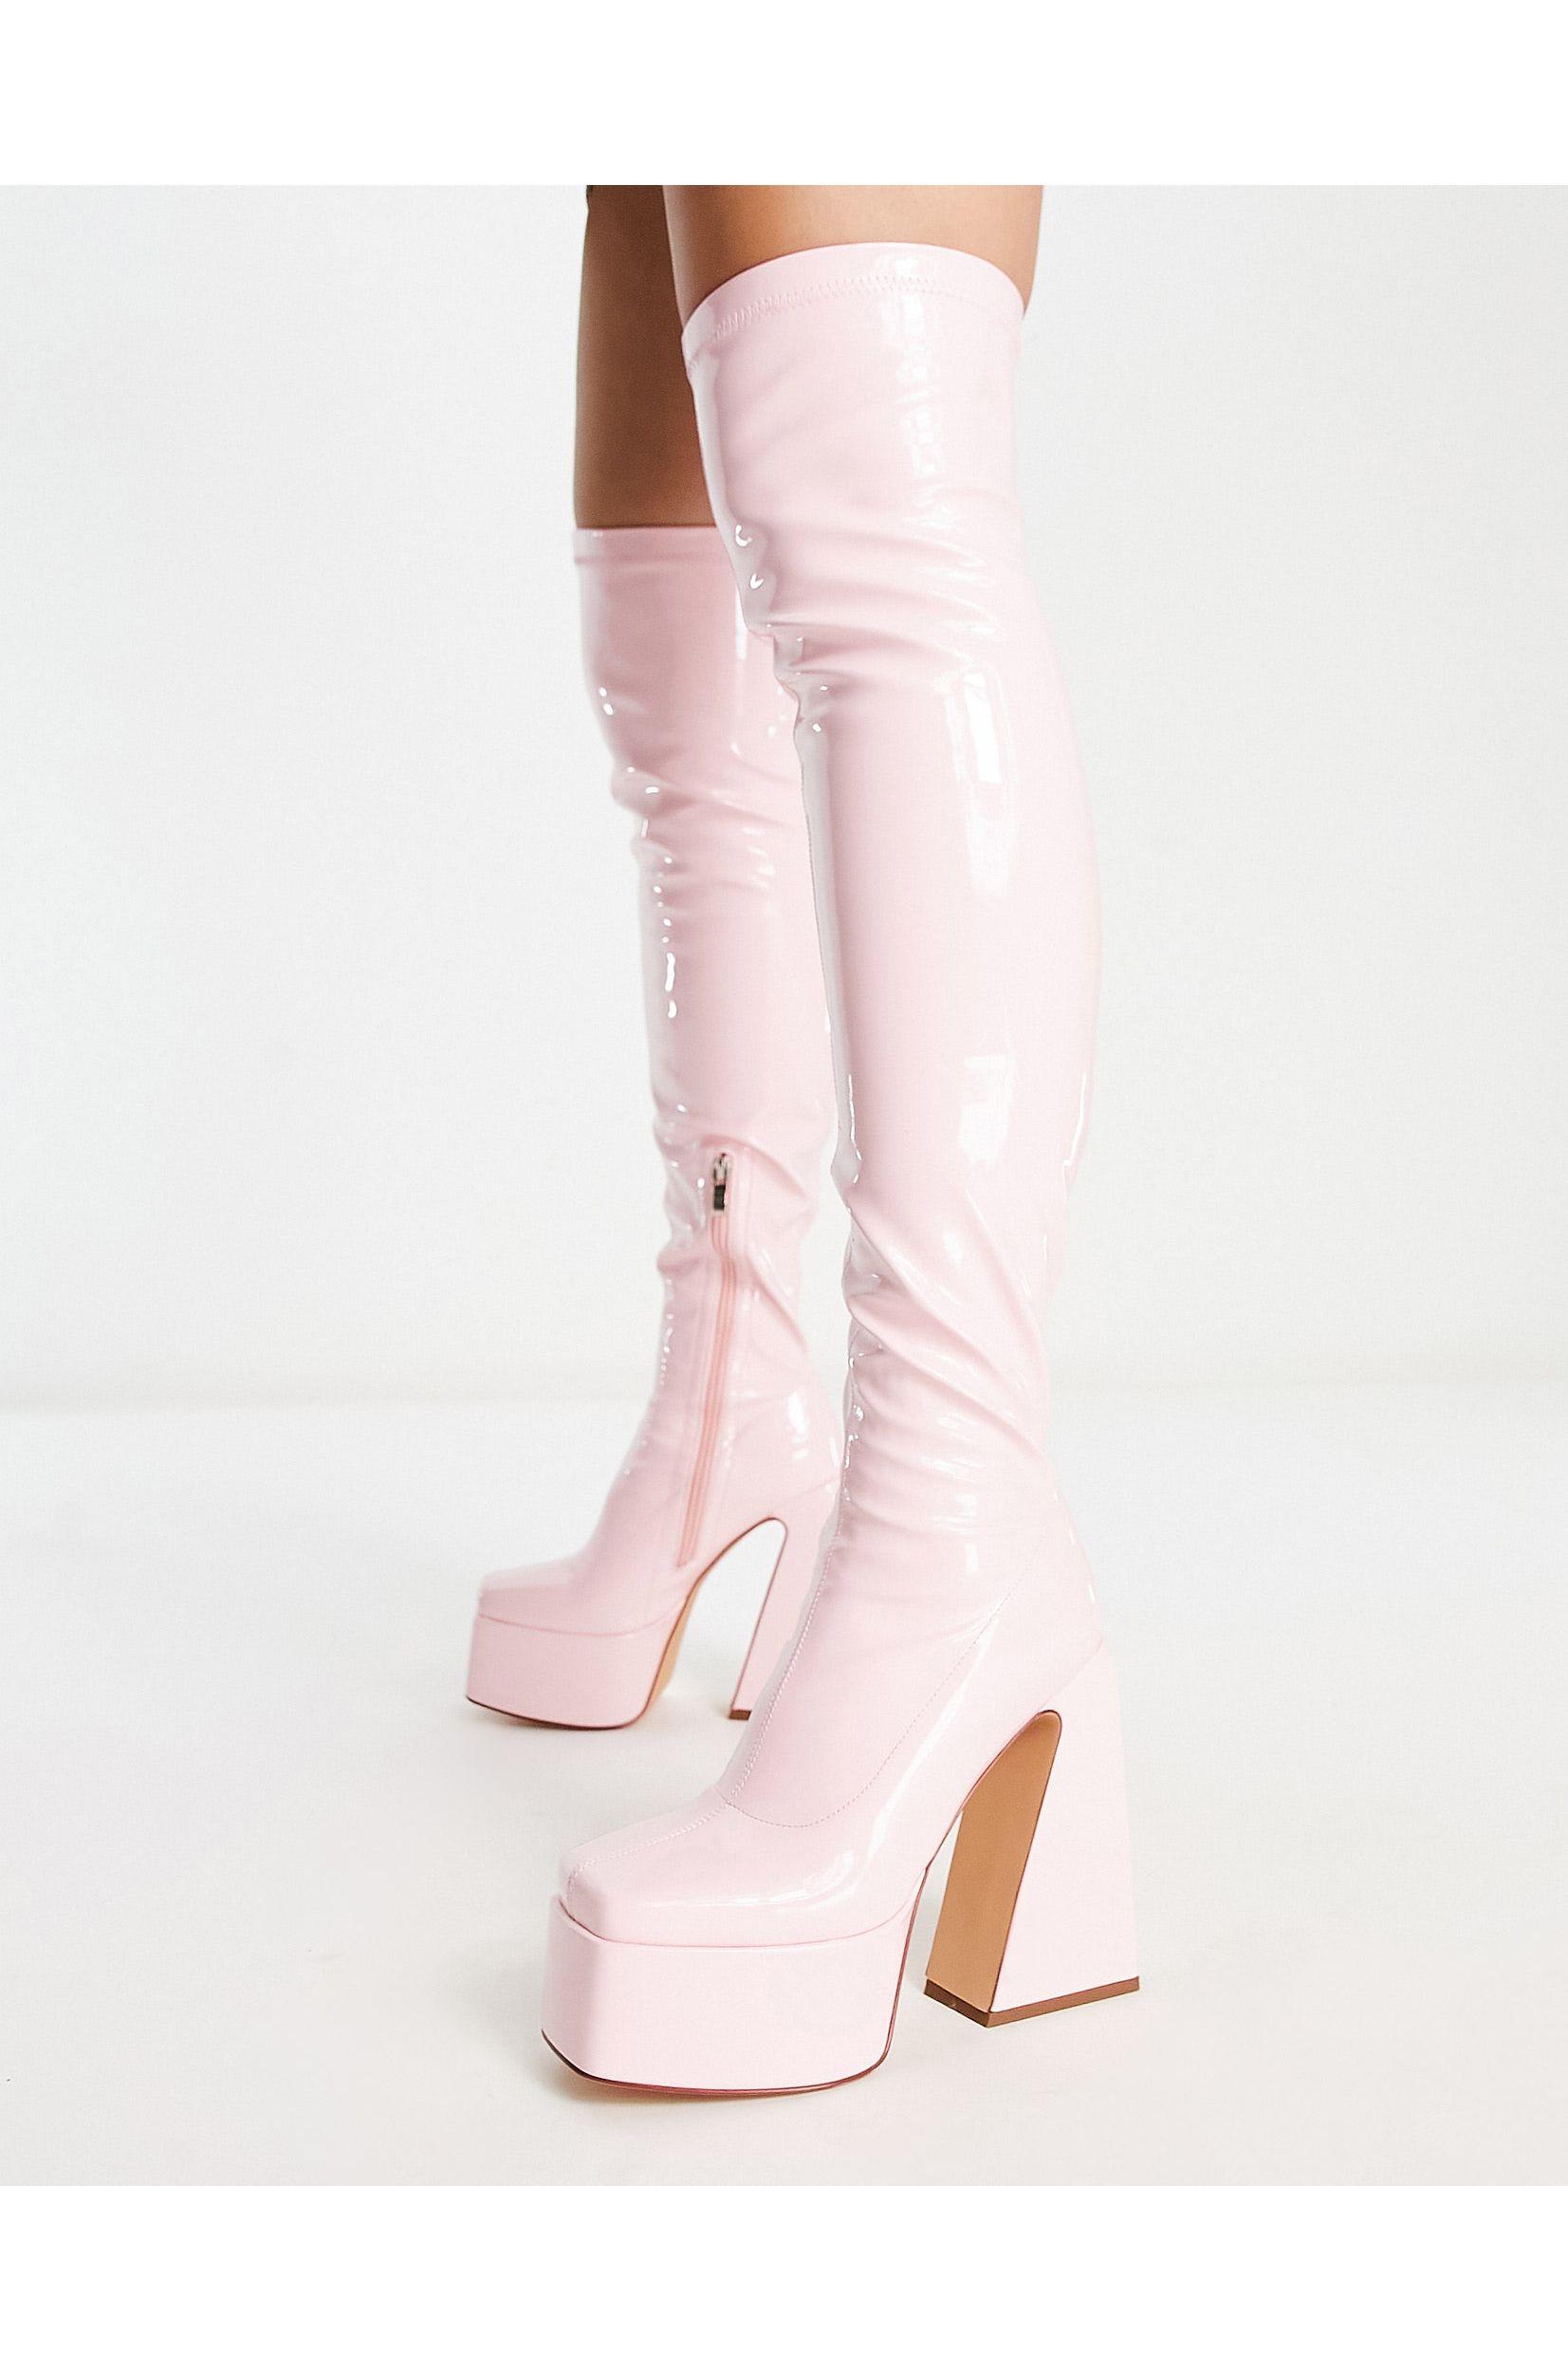 Simmi Shoes Simmi London Platform Heel Second Skin Boots In Pink Lyst Uk